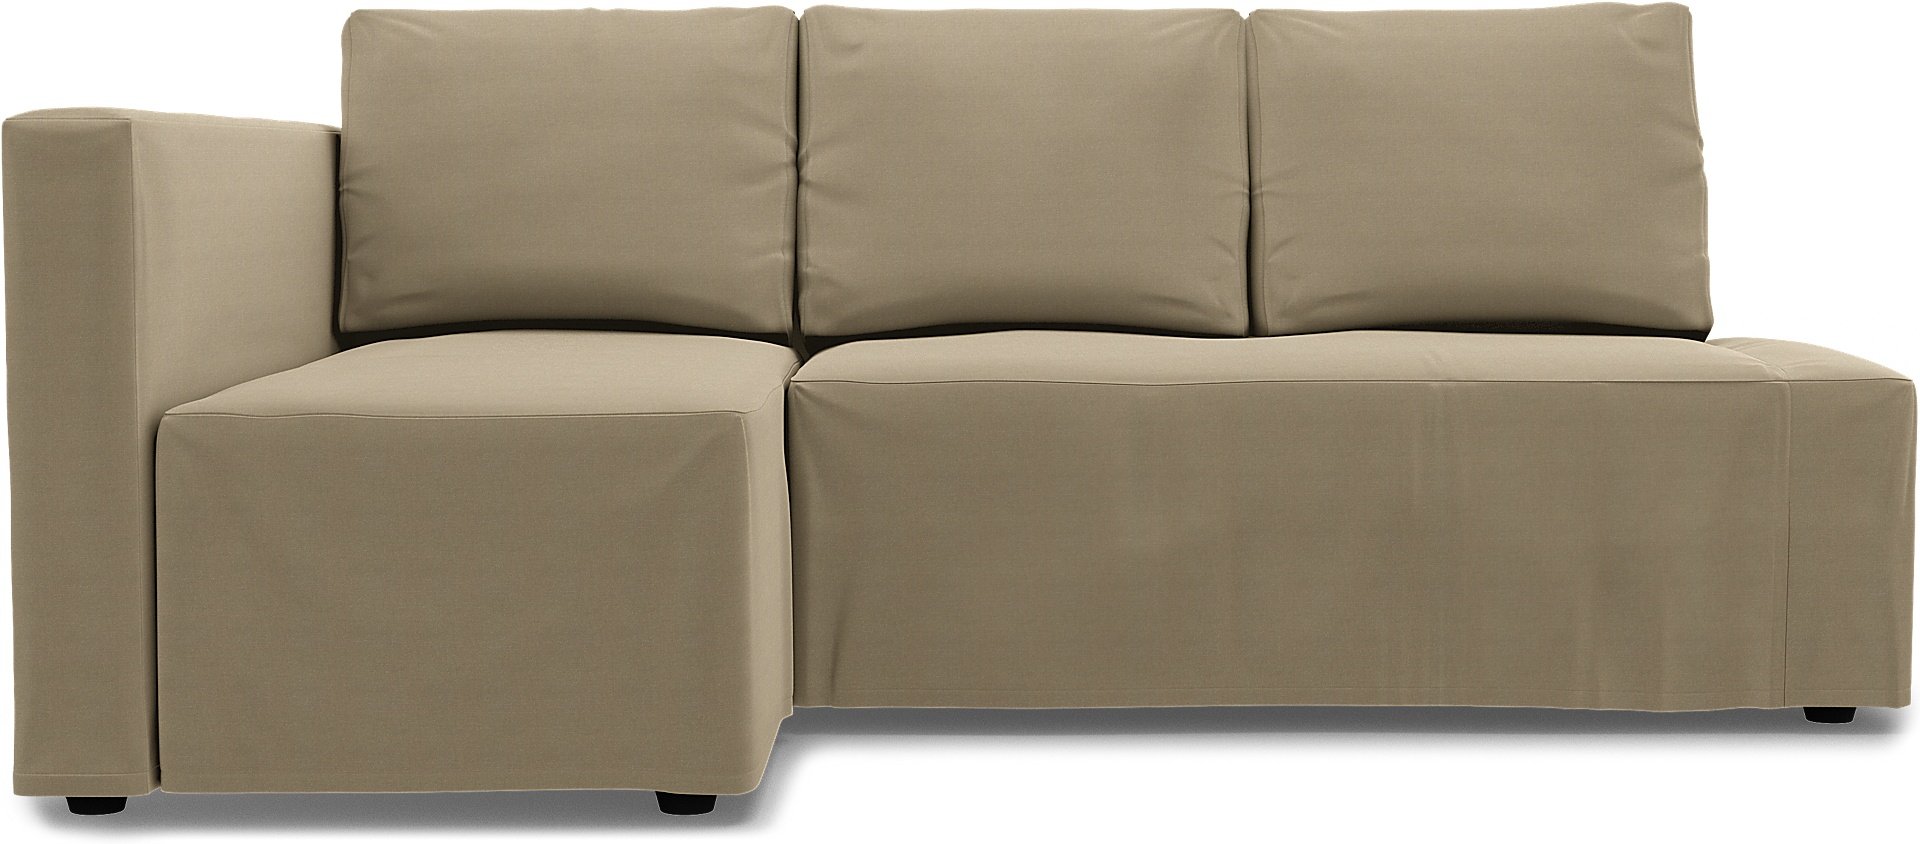 IKEA - Friheten Sofa Bed with Left Chaise Cover, Tan, Linen - Bemz